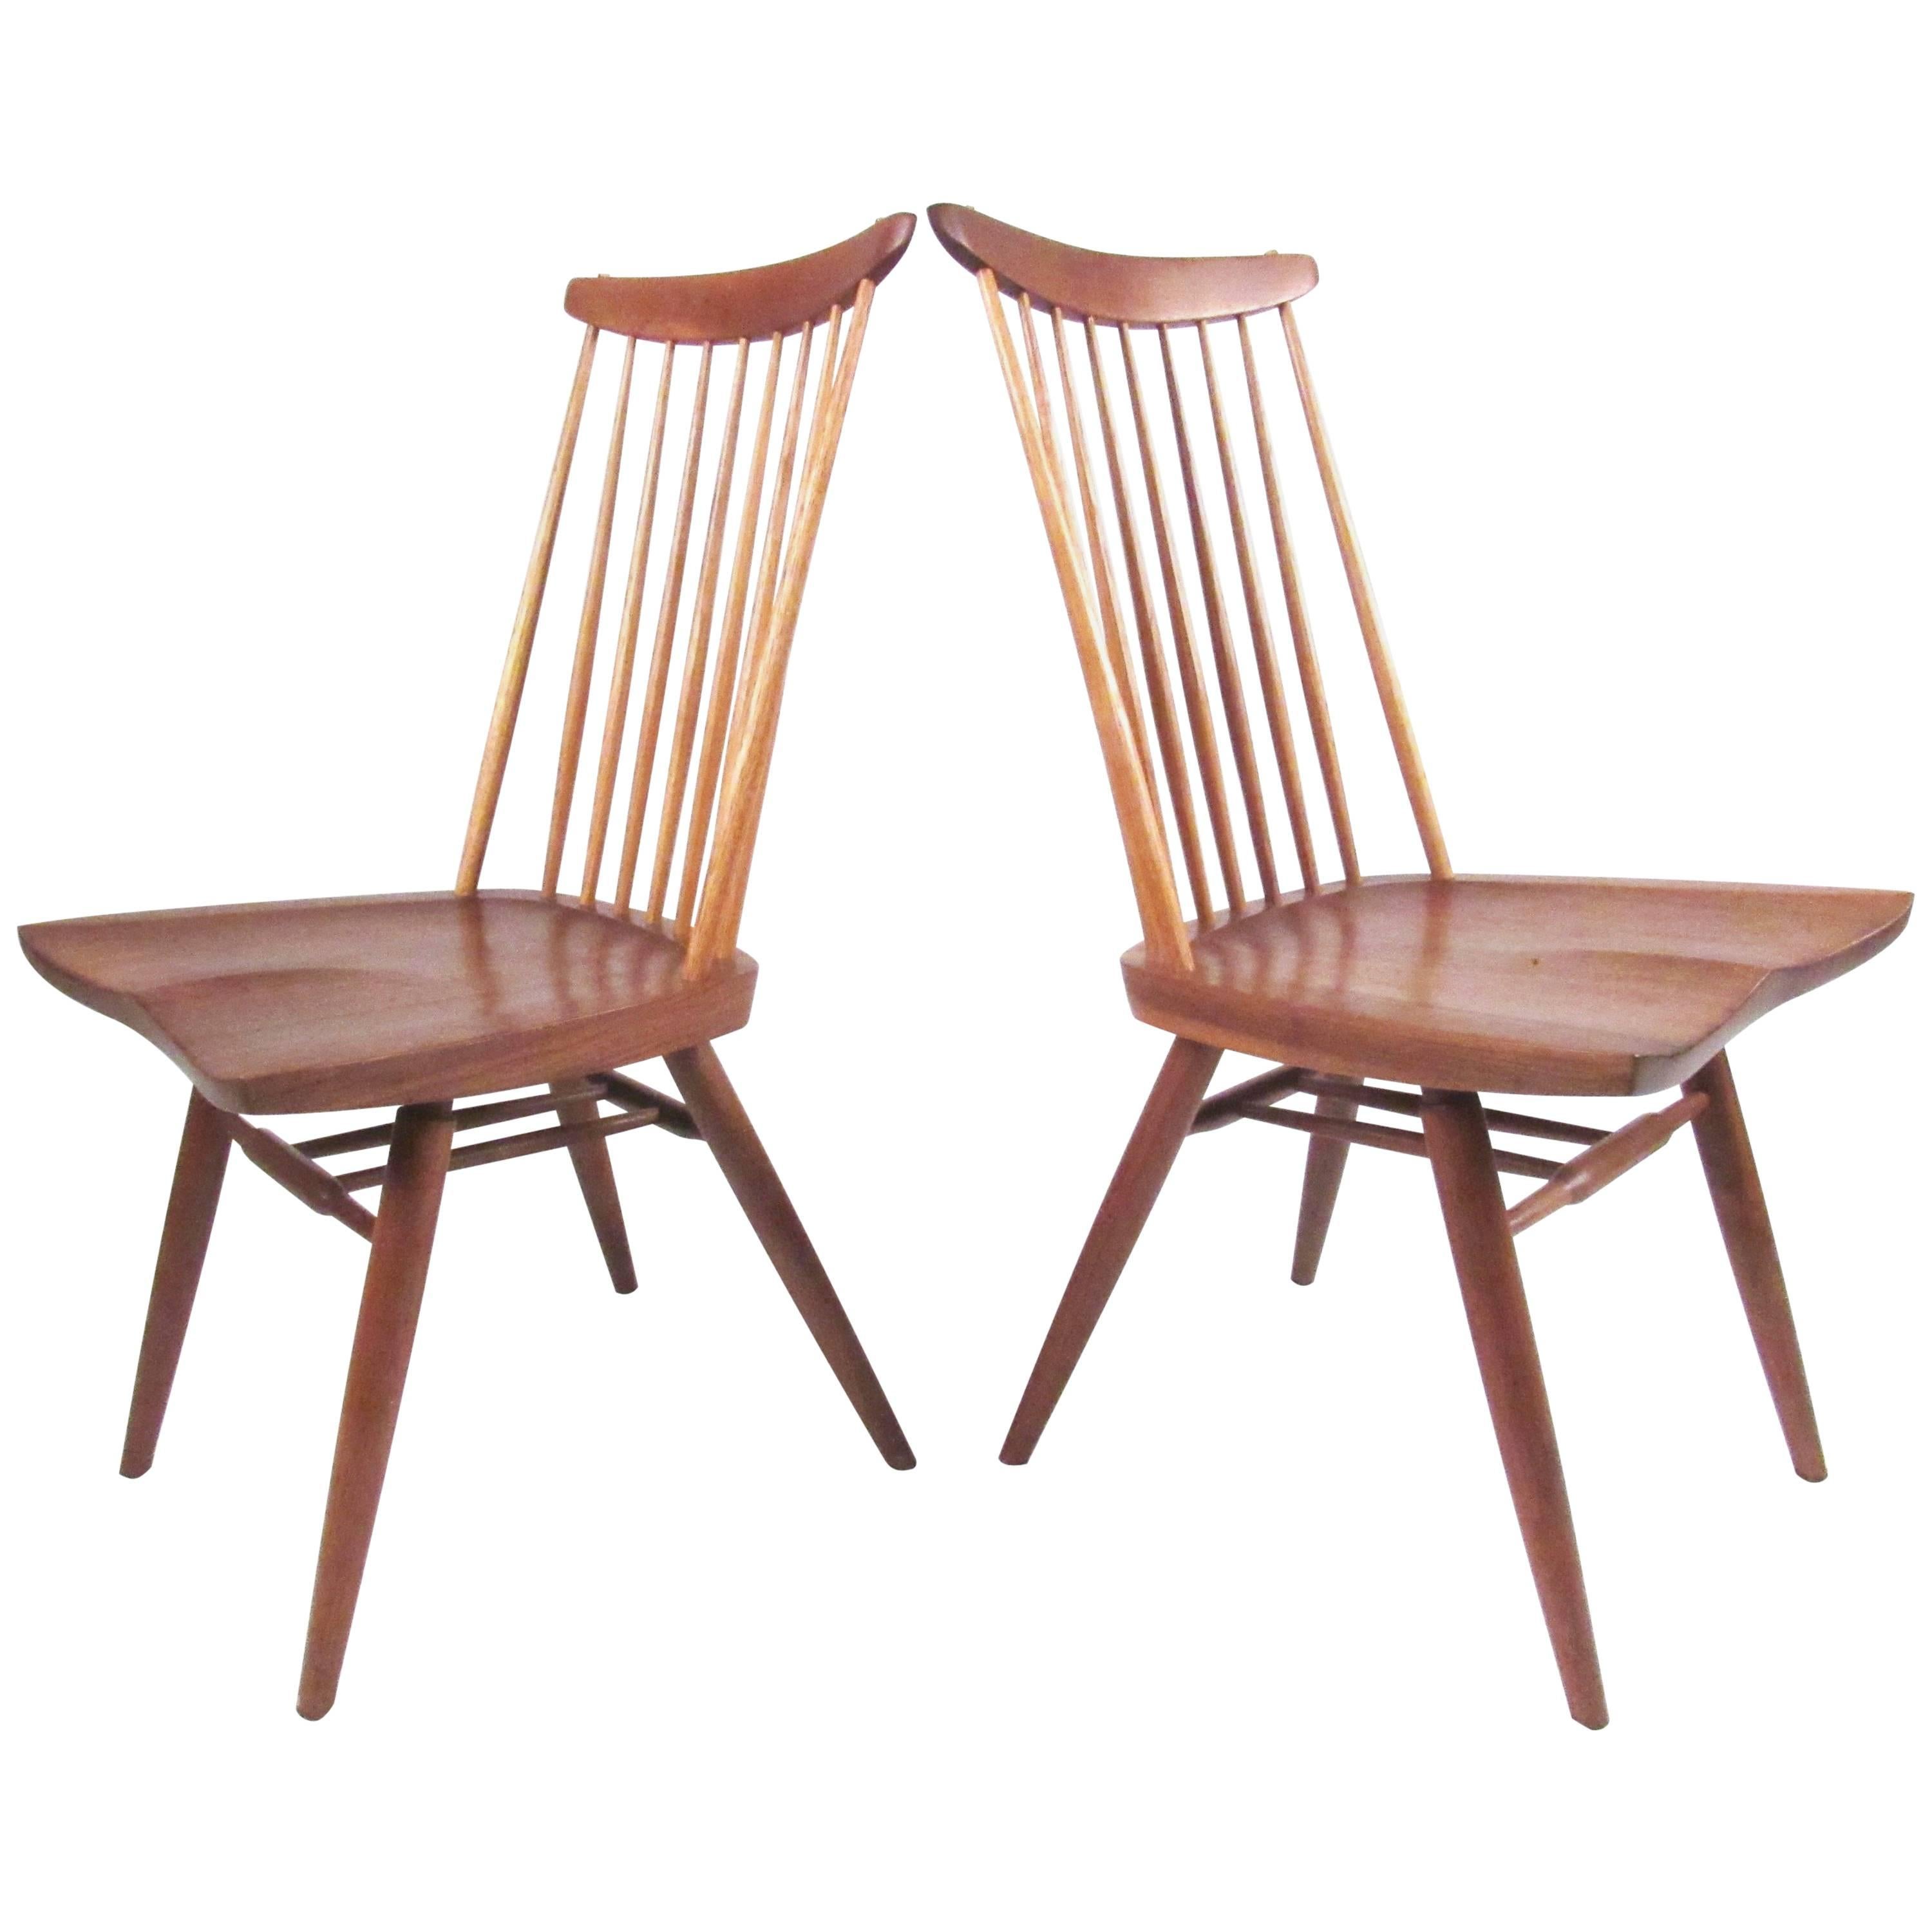 Pair American Modern "New Chairs" by Mira Nakashima